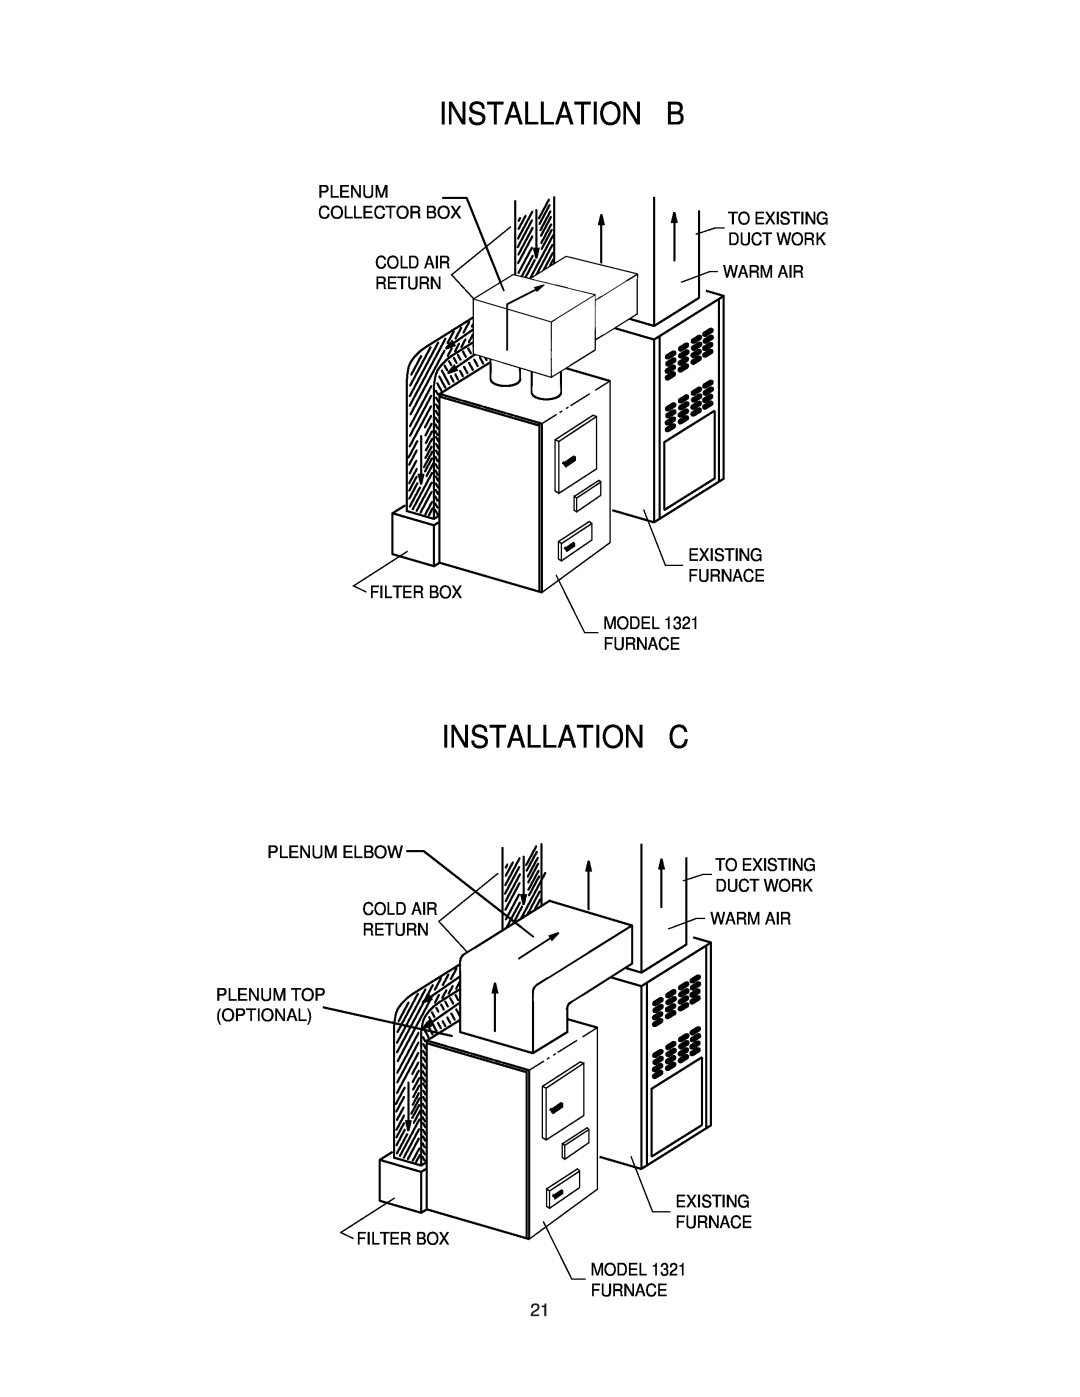 United States Stove 1321 Installation B, Installation C, Plenum Collector Box Cold Air Return Filter Box, Model Furnace 